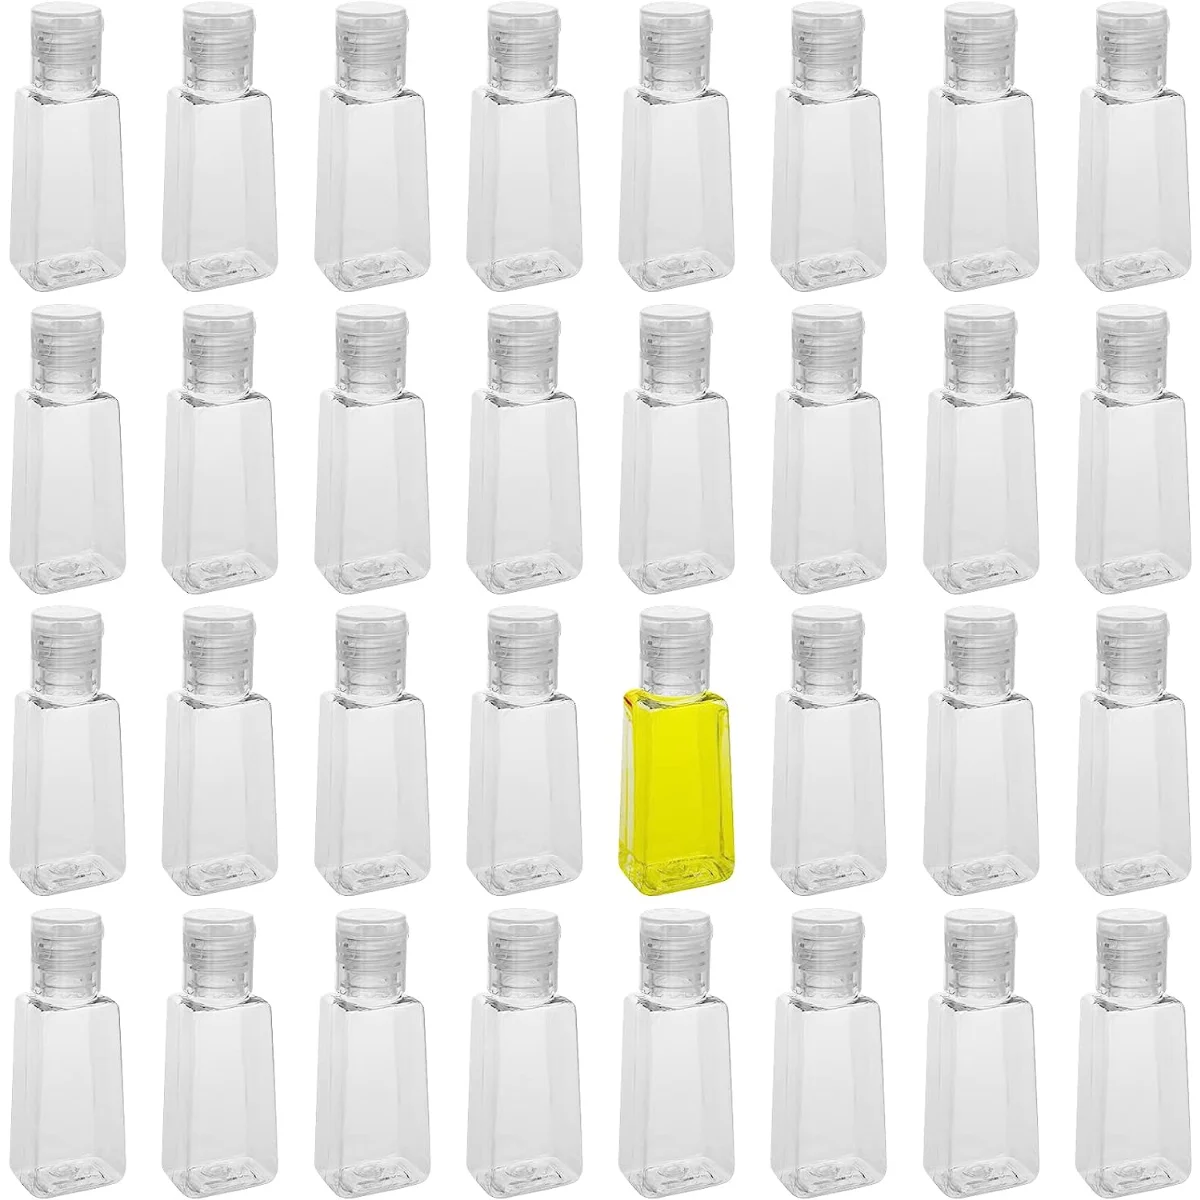 

180PCS Plastic Empty Bottles 1oz/30ML Refillable Travel Size Bottles Mini Plastic Vial Toiletry Container for Shampoo Toiletries